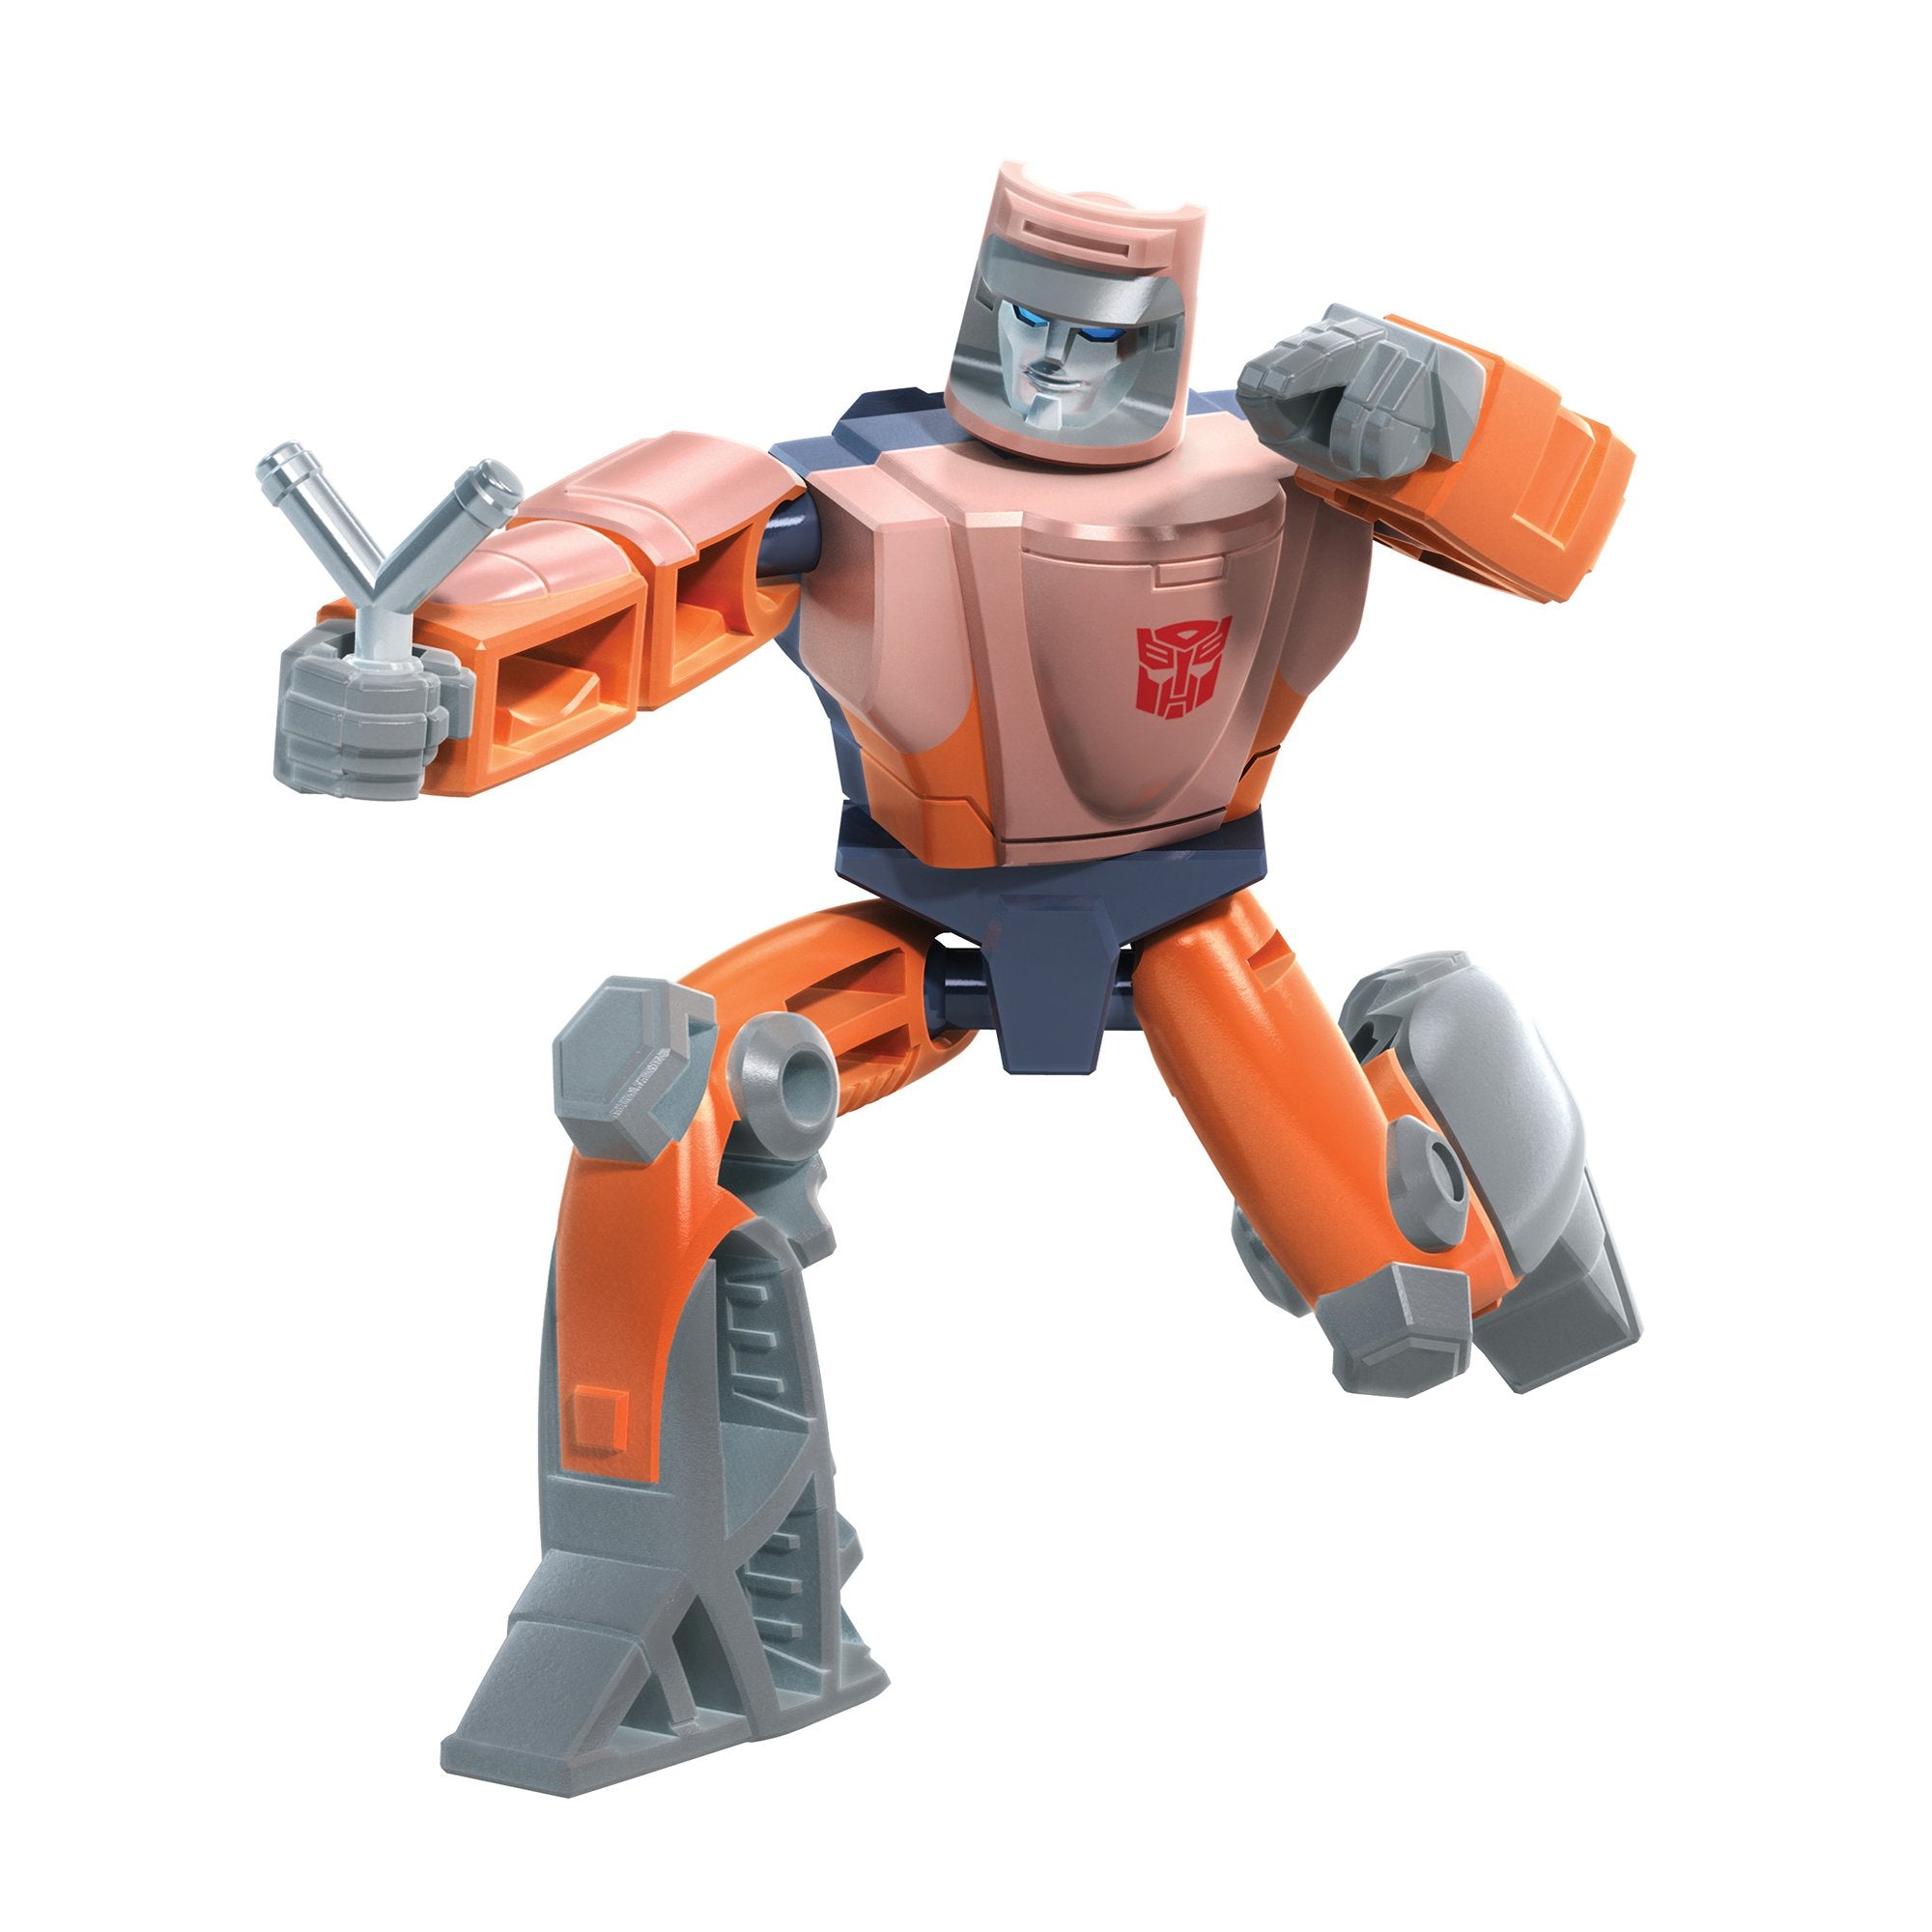 Hasbro - Transformers Generations - Studio Series - Grimlock &amp; Wheelie - Marvelous Toys